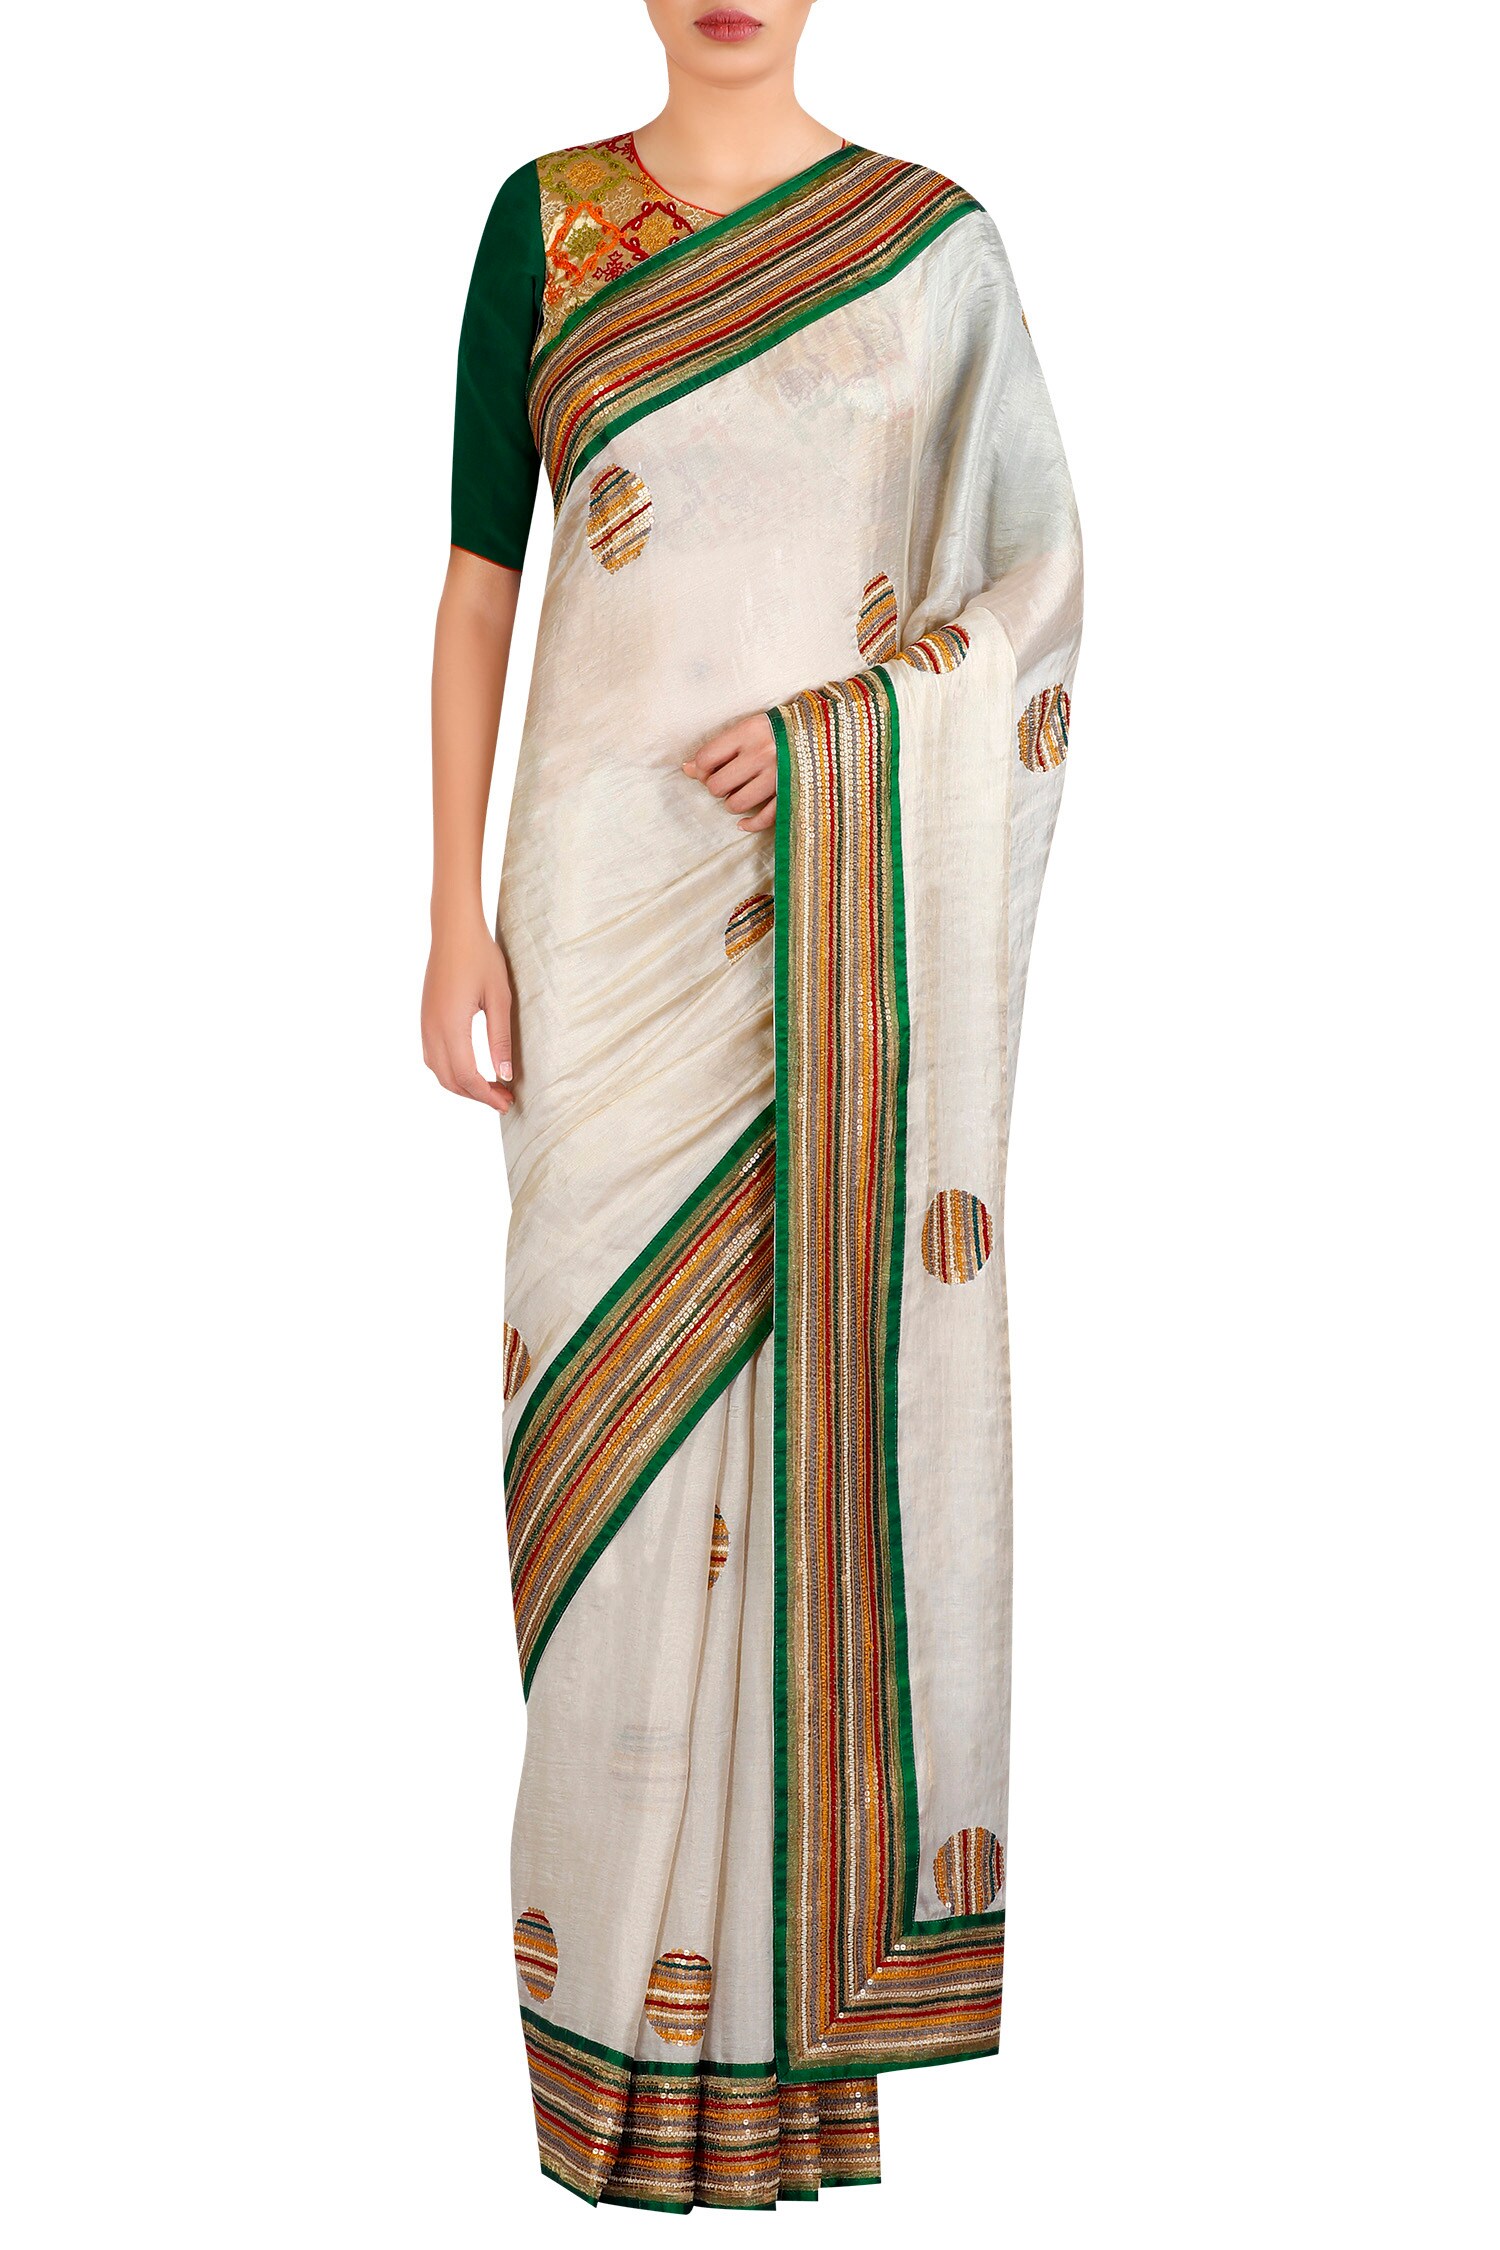 Latha Puttanna Green Threadwork Embroidered Saree With Blouse